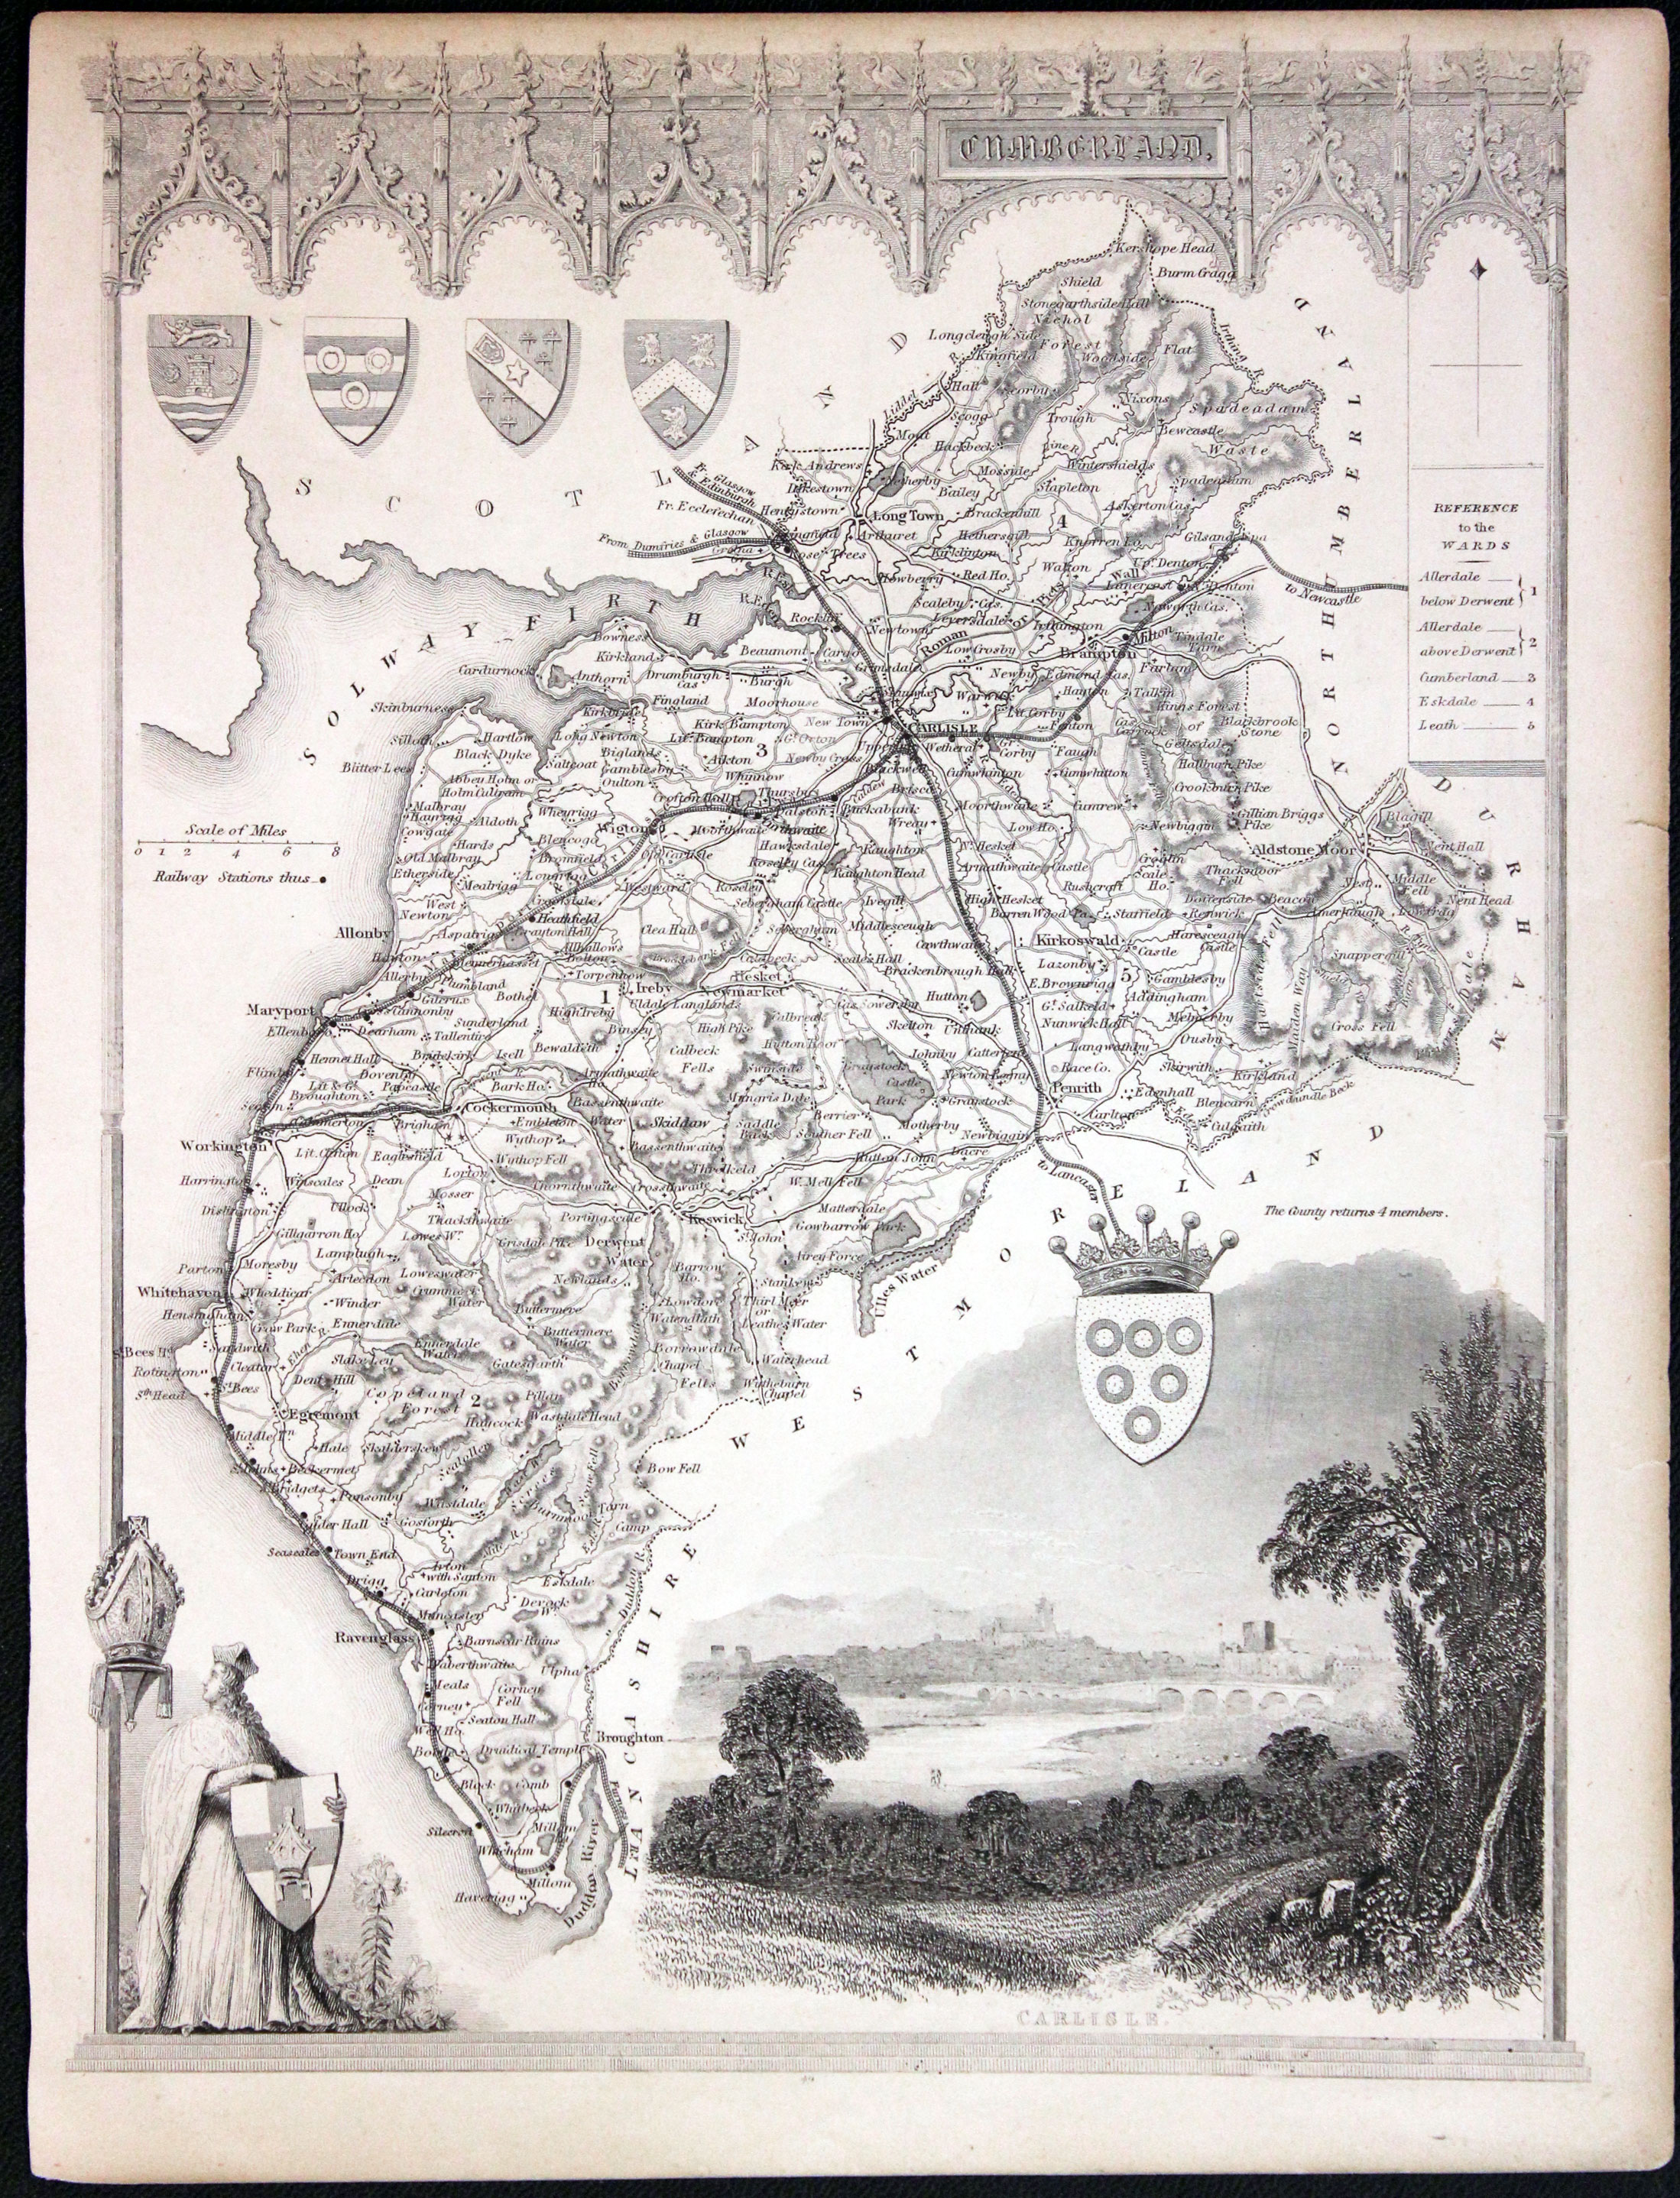 Antique Maps of Cumberland, England - Richard Nicholson